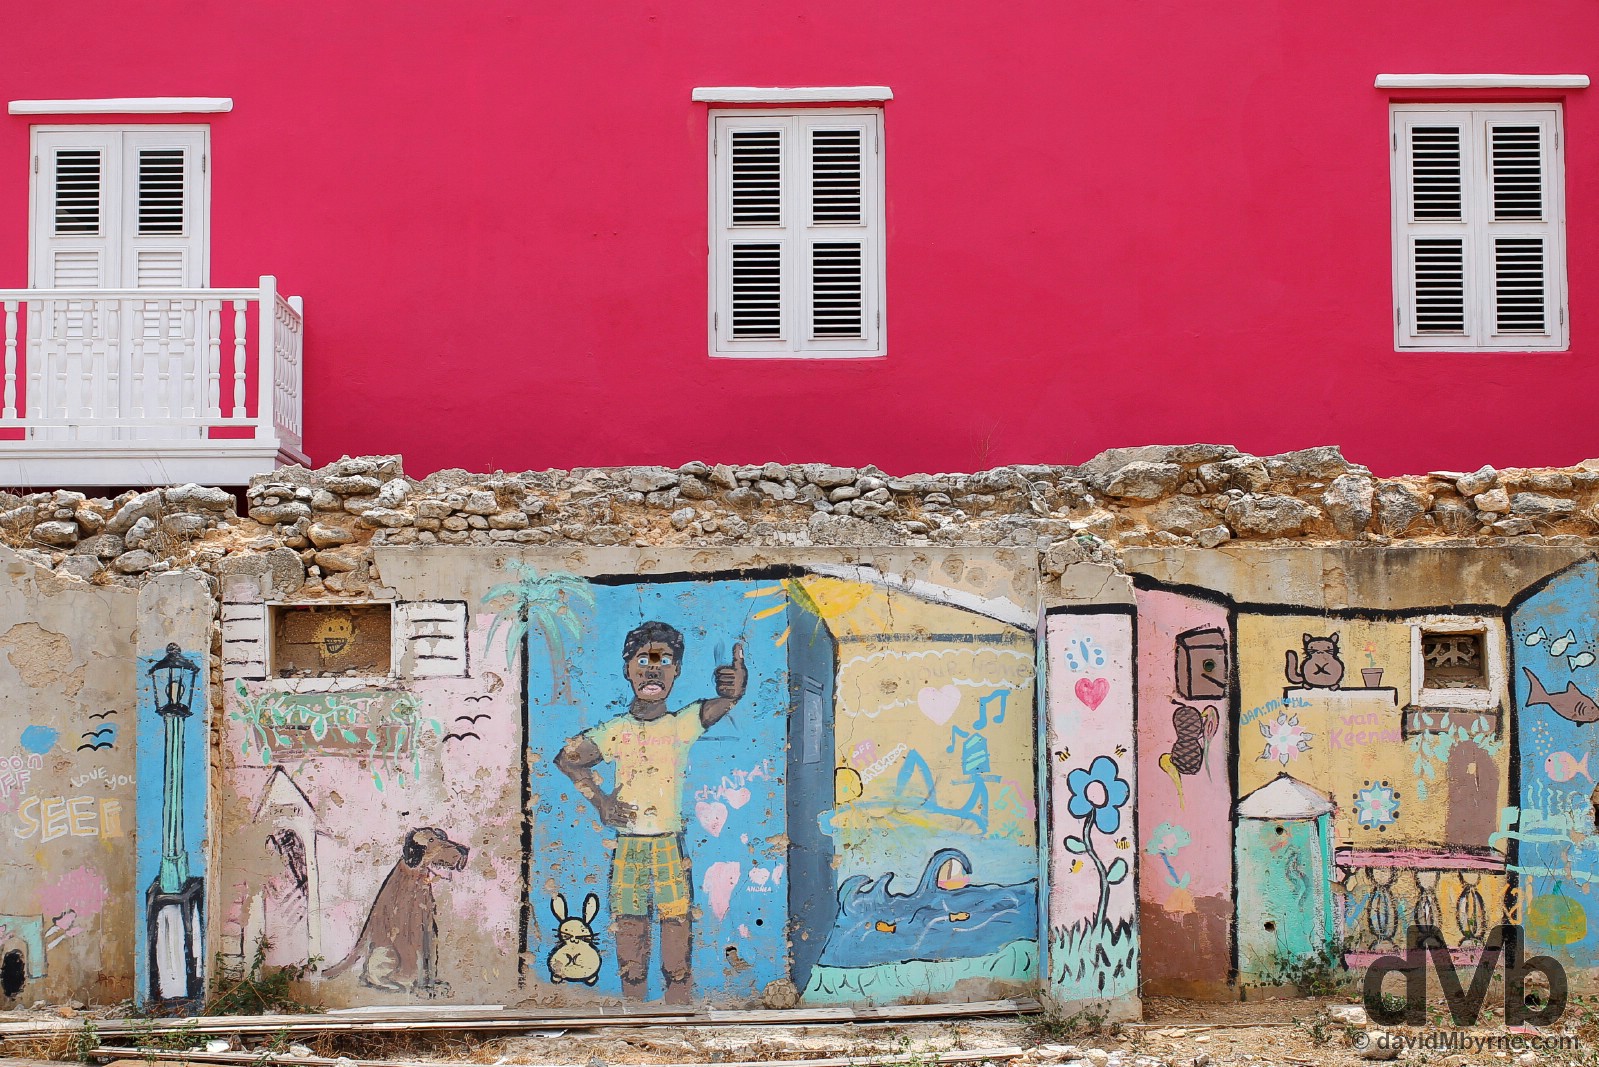 Otrobanda, Willemstad, Curacao, Lesser Antilles. June 19, 2015.